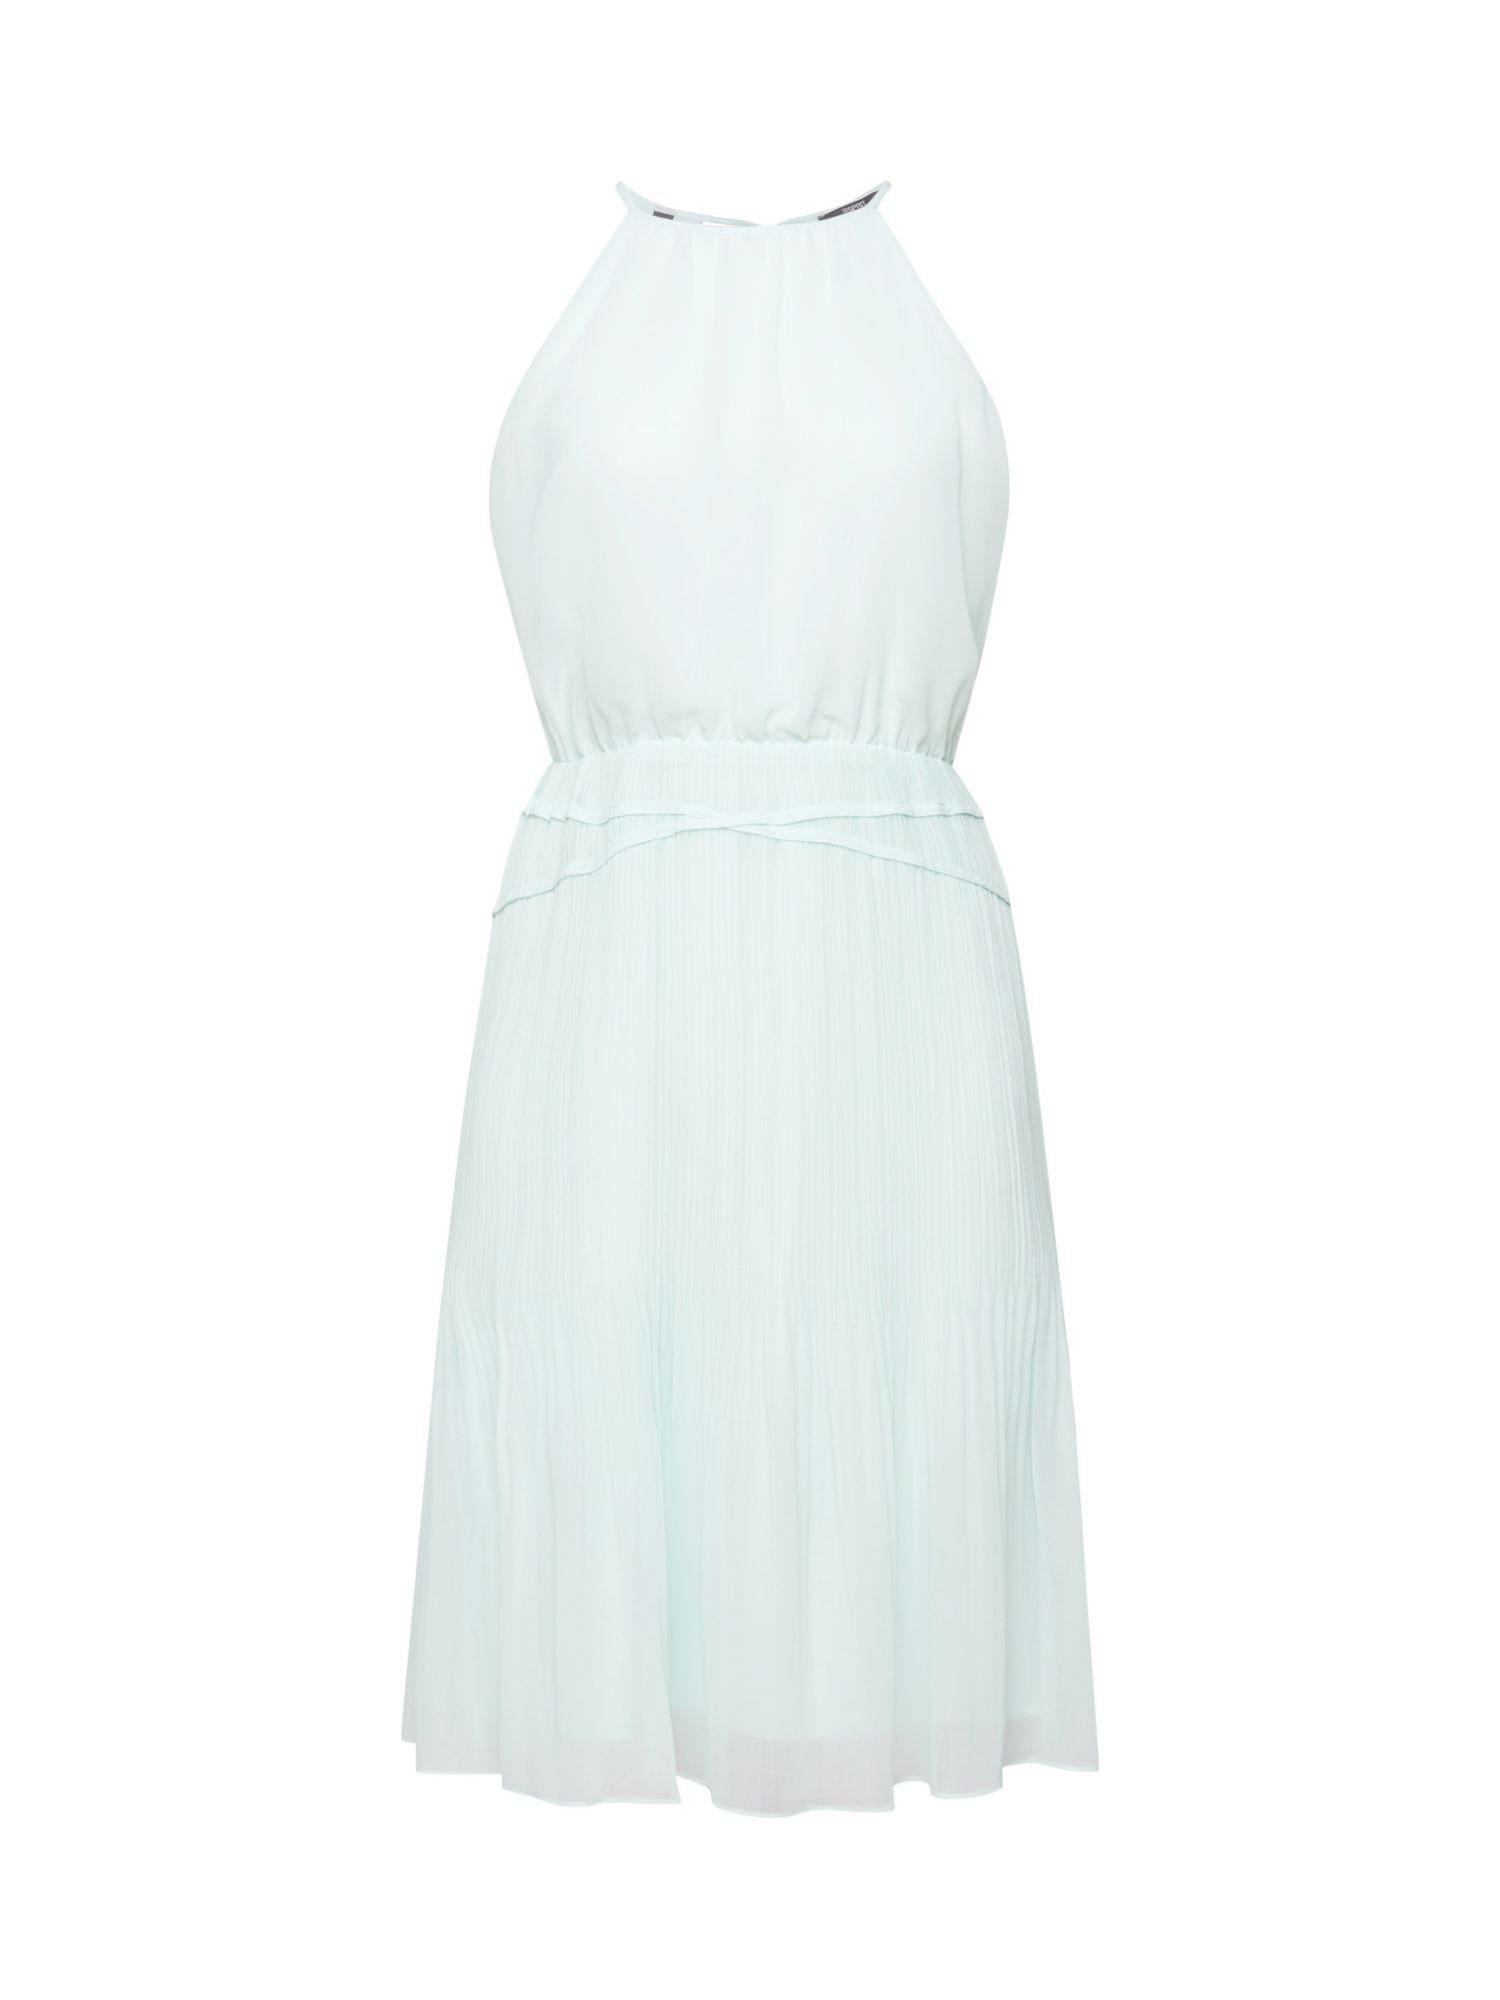 Esprit Collection LIGHT AQUA Kleid Minikleid Chiffon aus GREEN recyceltem